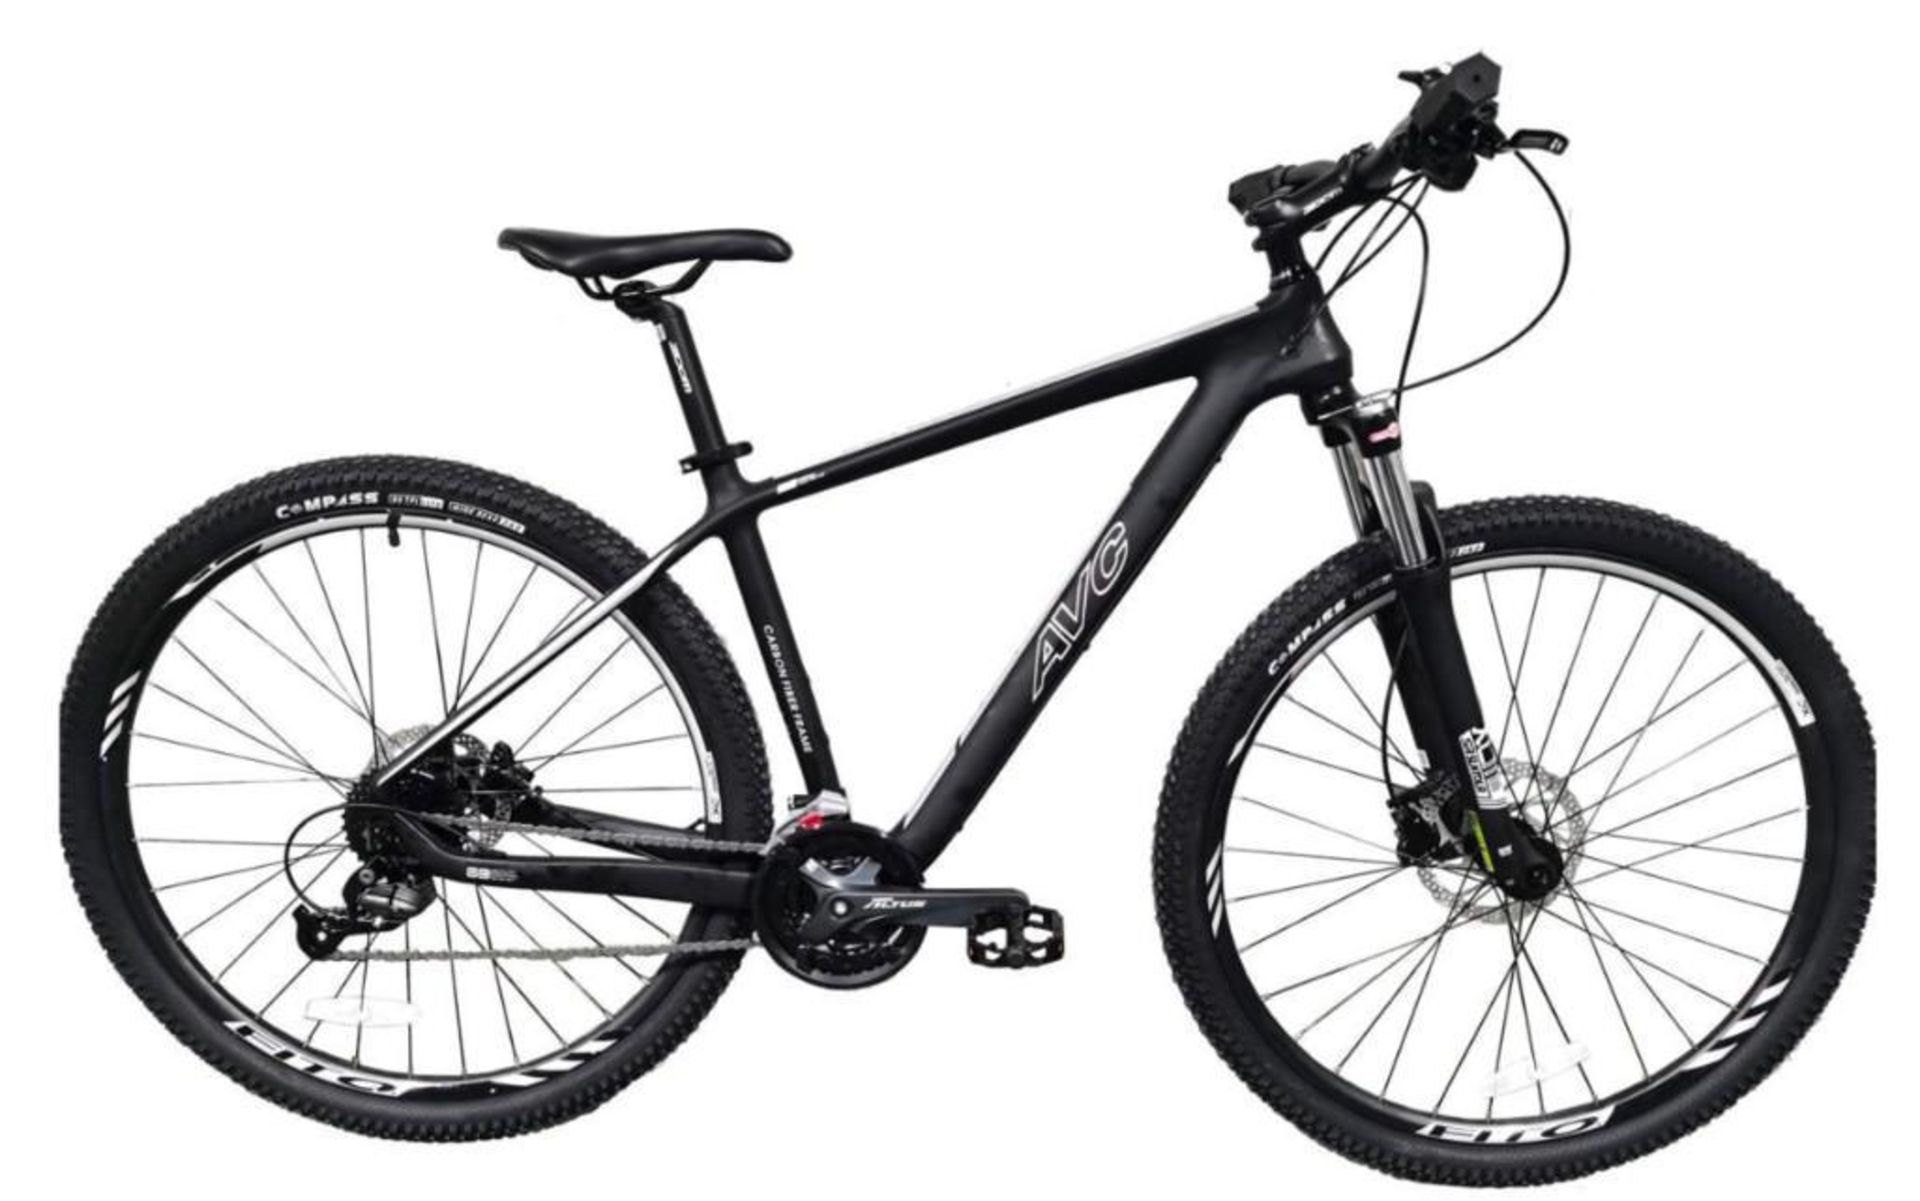 AVC 29" carbon fiber mountain bike